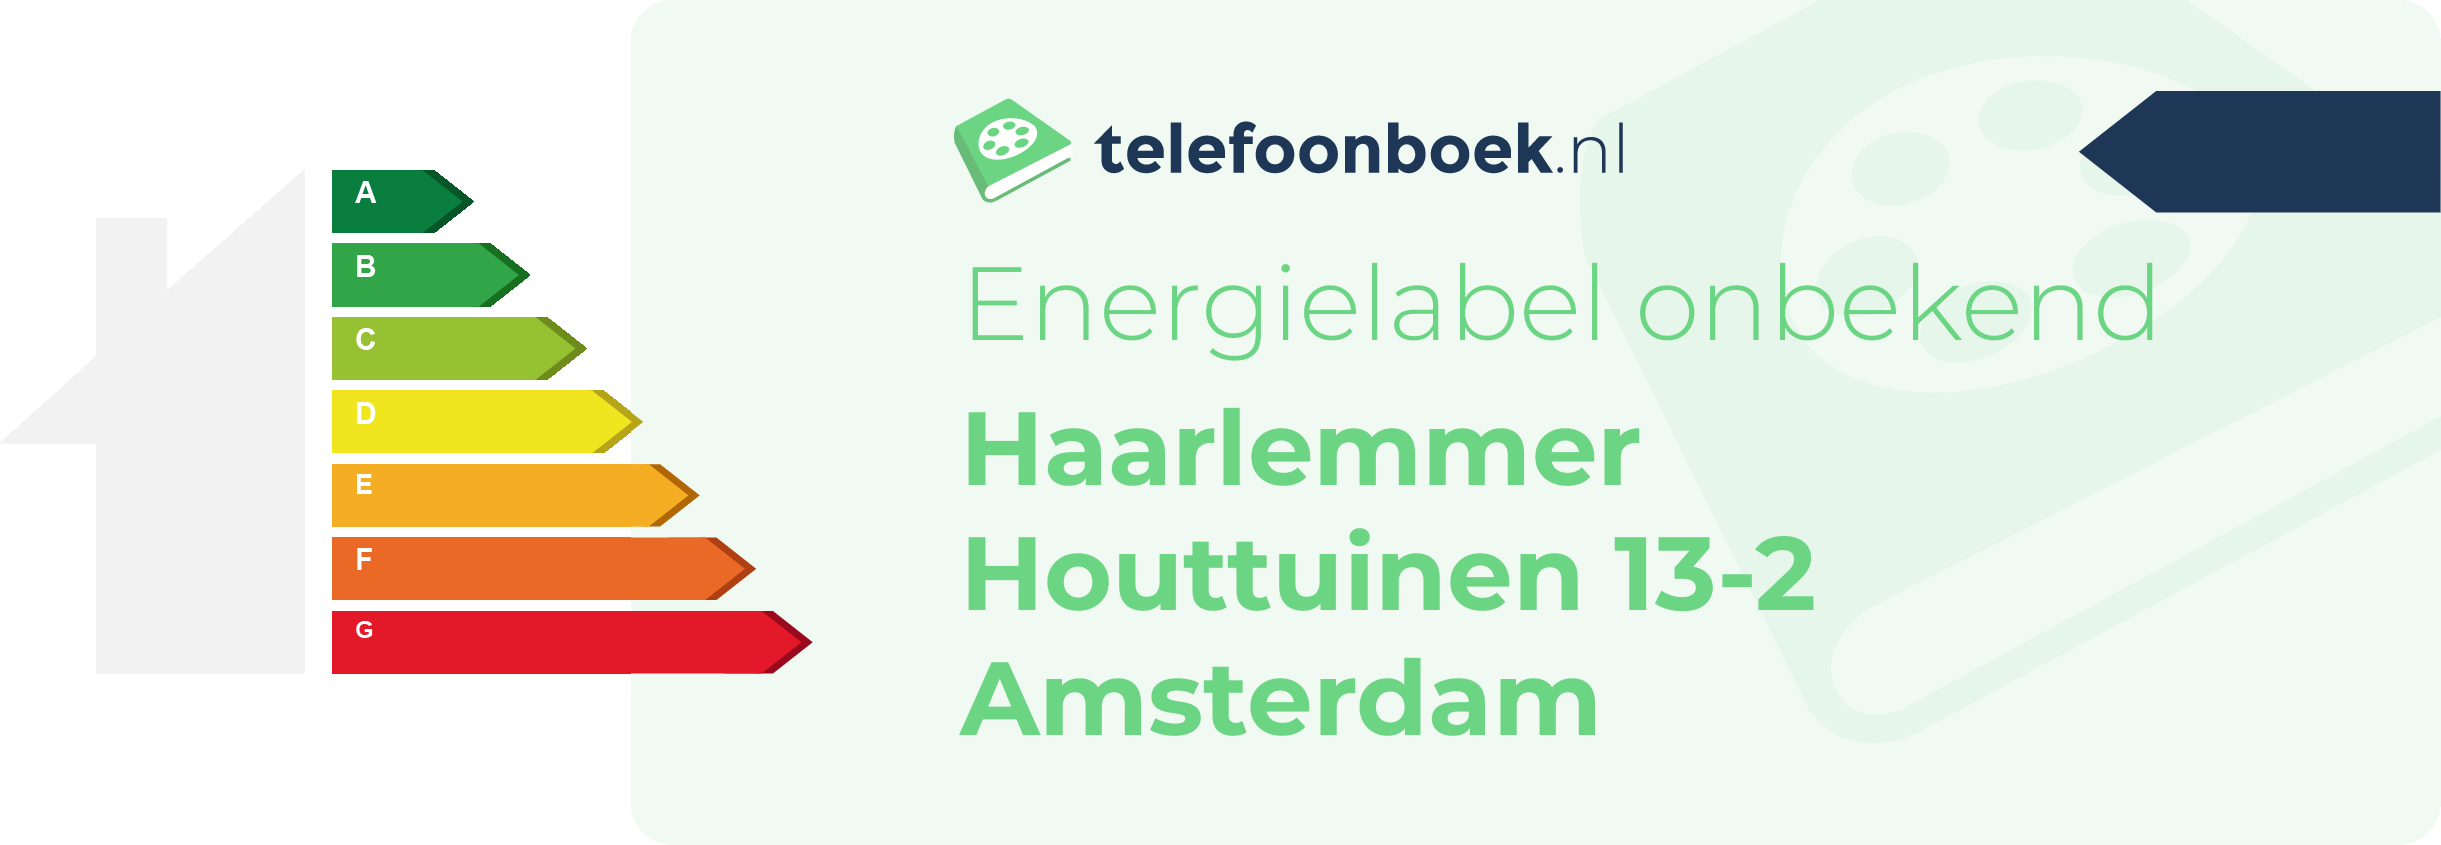 Energielabel Haarlemmer Houttuinen 13-2 Amsterdam